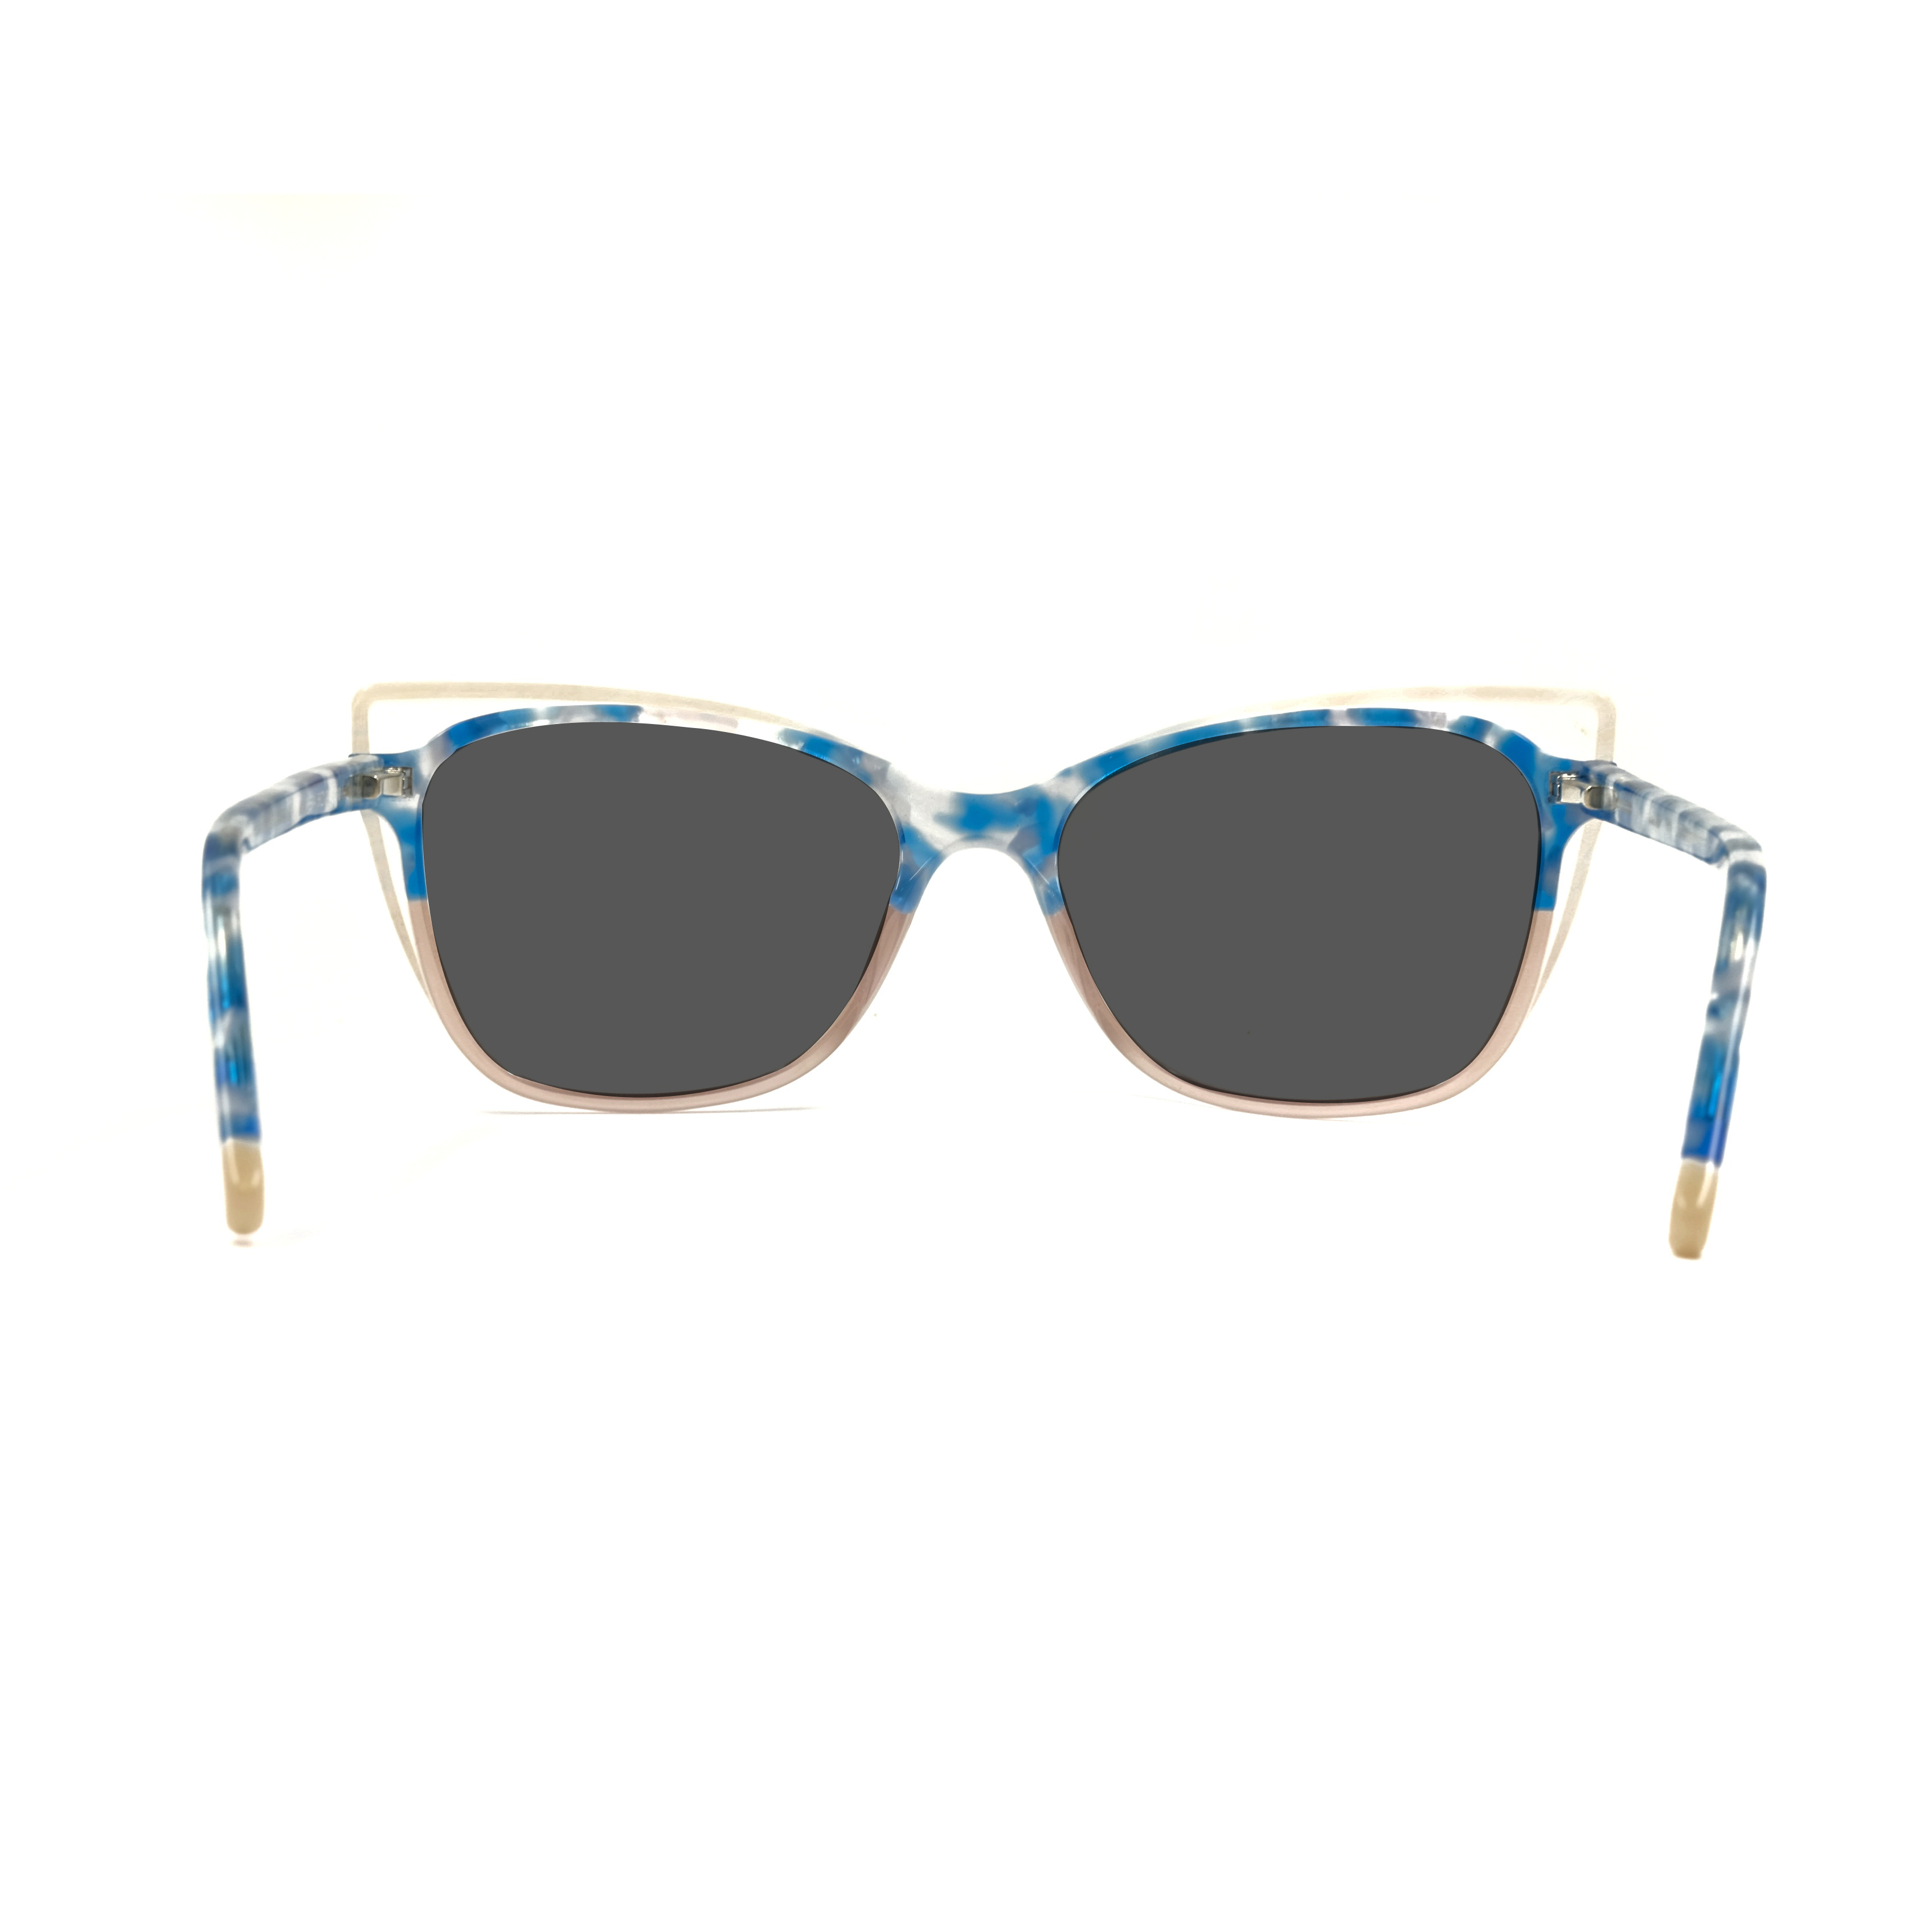 Gafas de sol hechas a medida Azul Blanco Acetato Tonos Moda Ojo de gato Crea tu propia empresa de gafas de sol